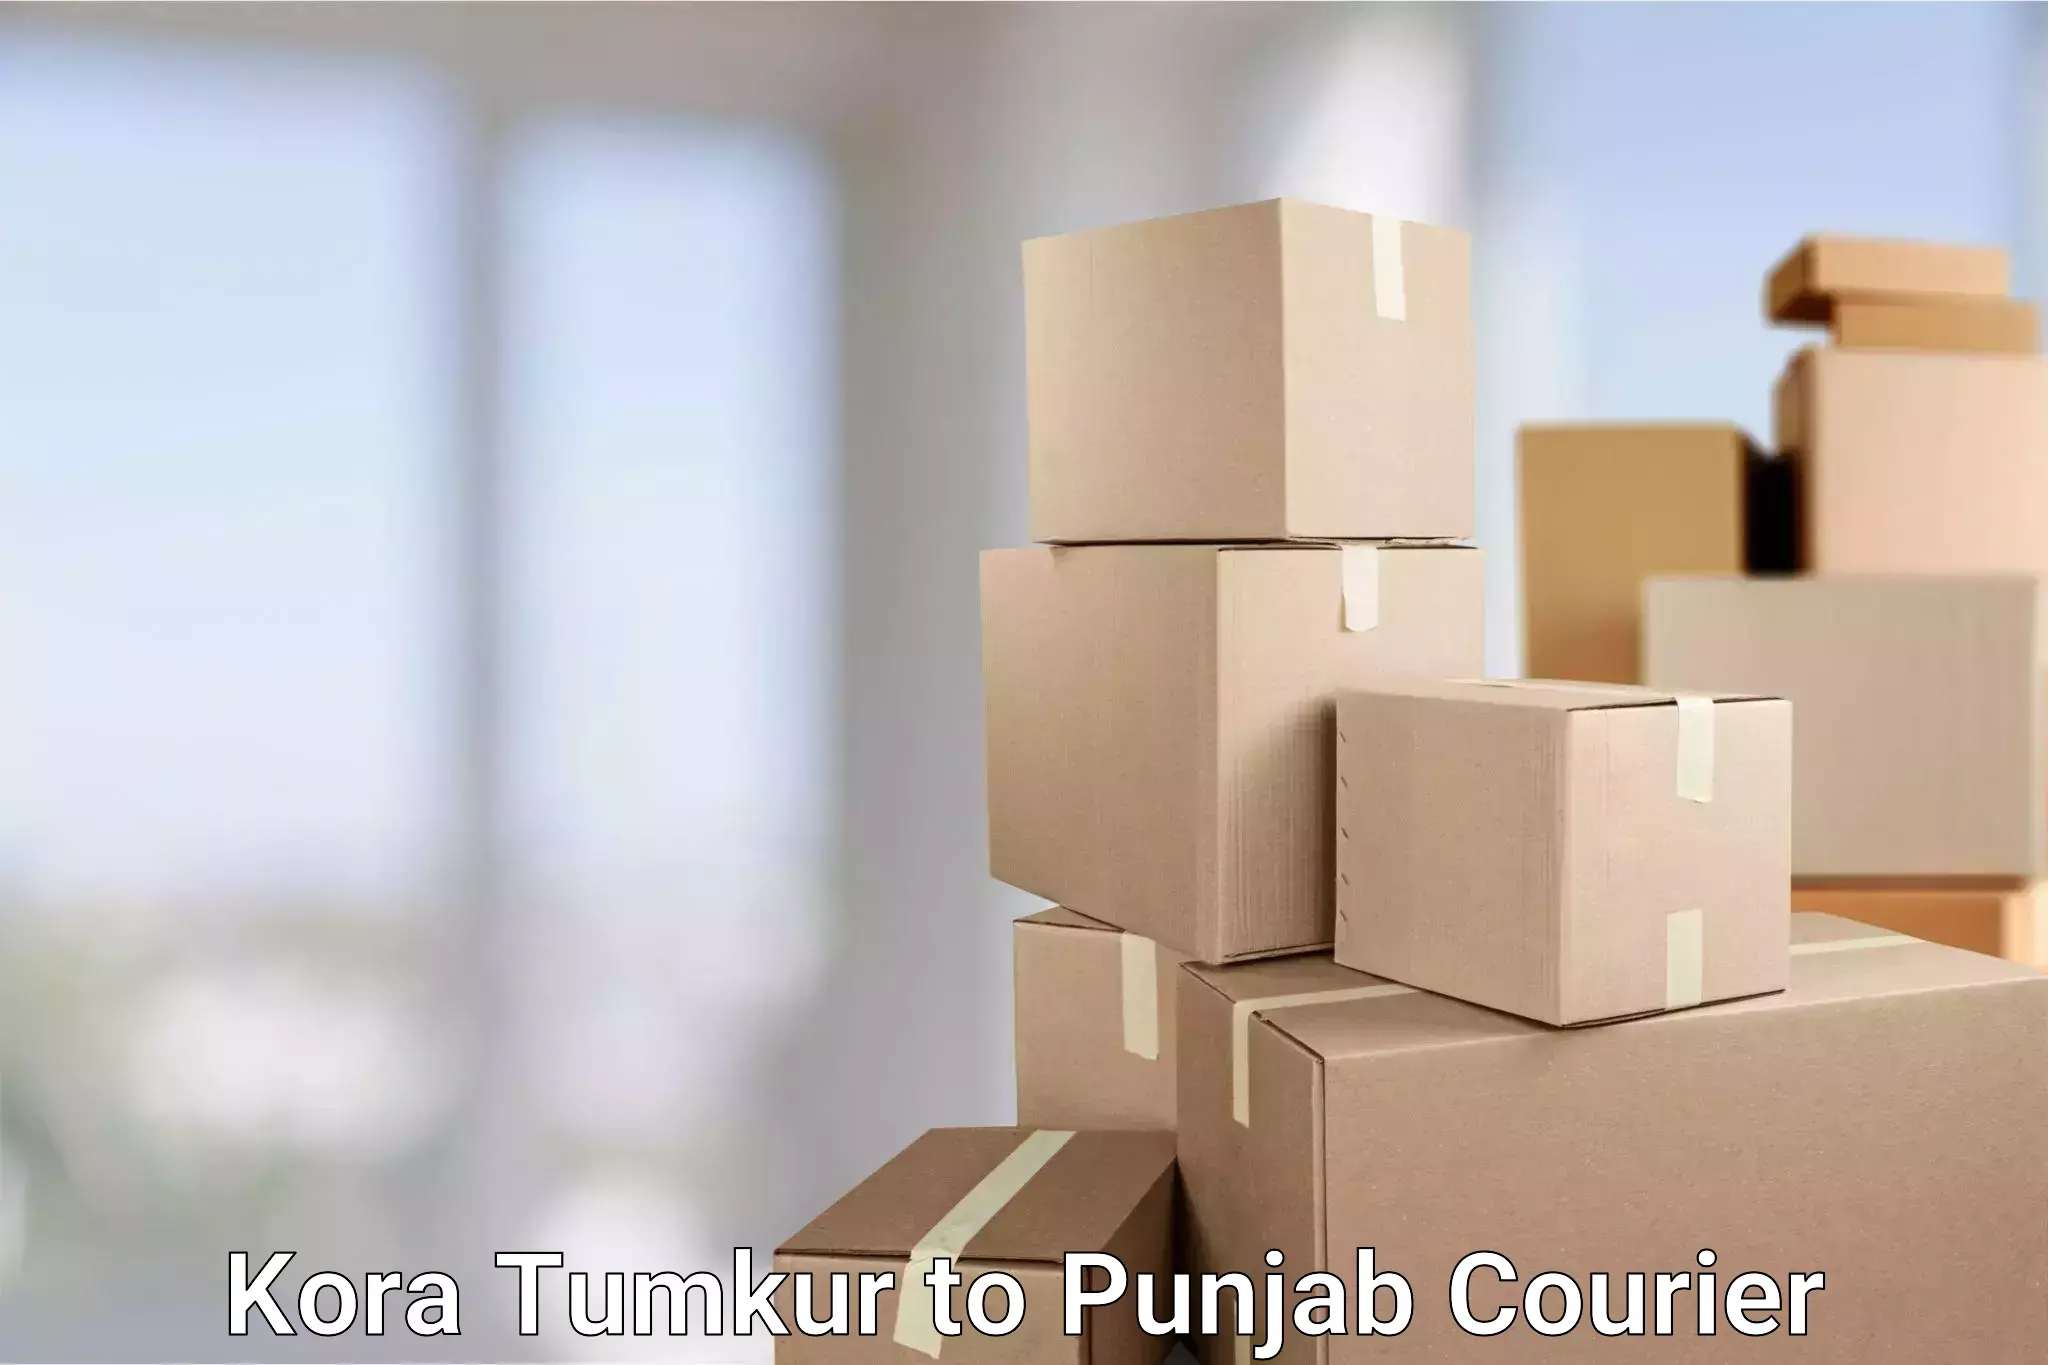 Customized shipping options Kora Tumkur to Zirakpur